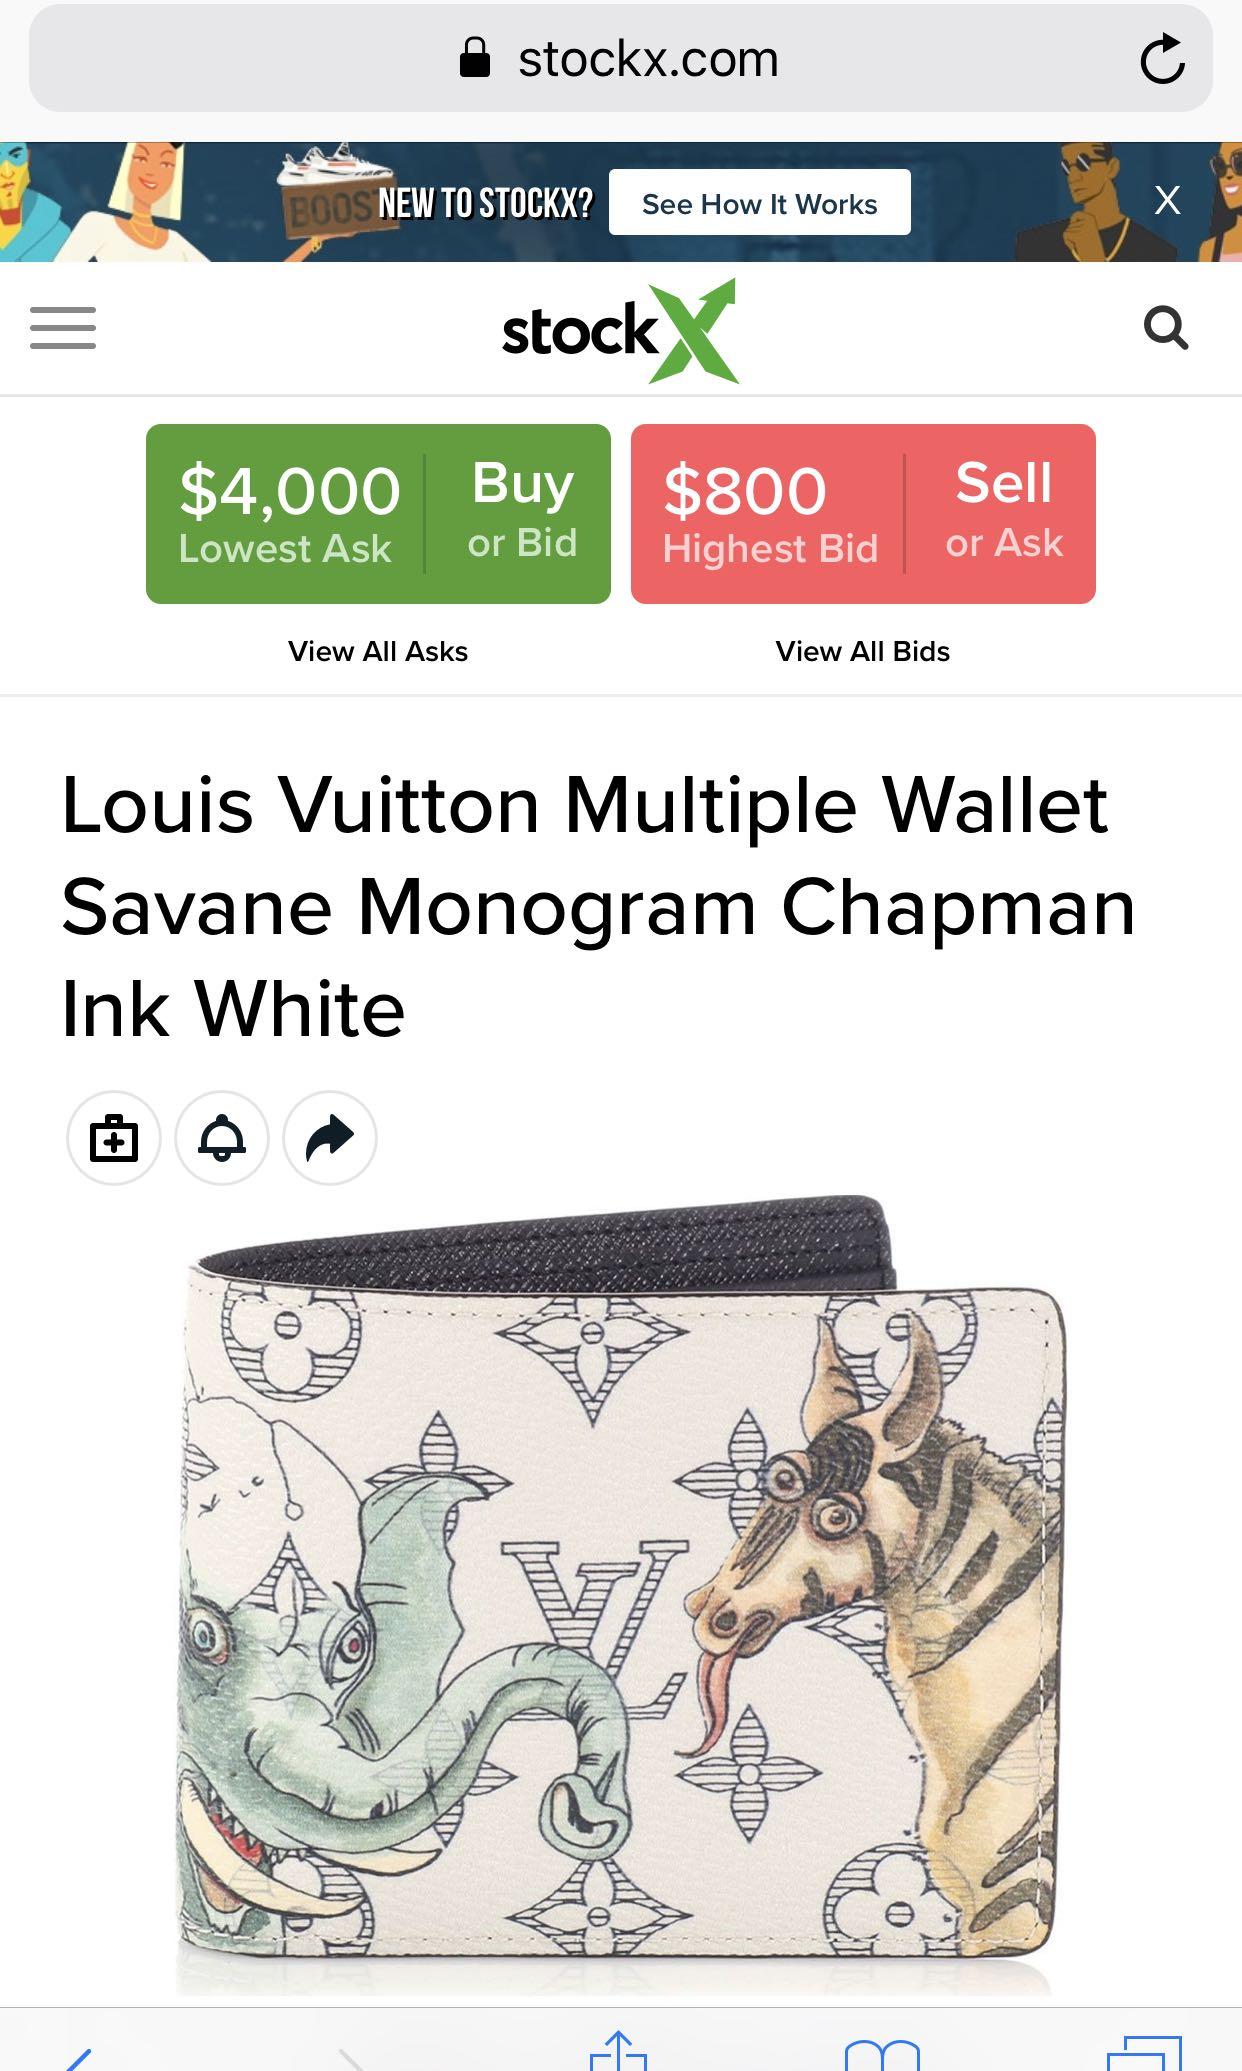 LOUIS VUITTON Savane Monogram Chapman Multiple Wallet Ink 415937